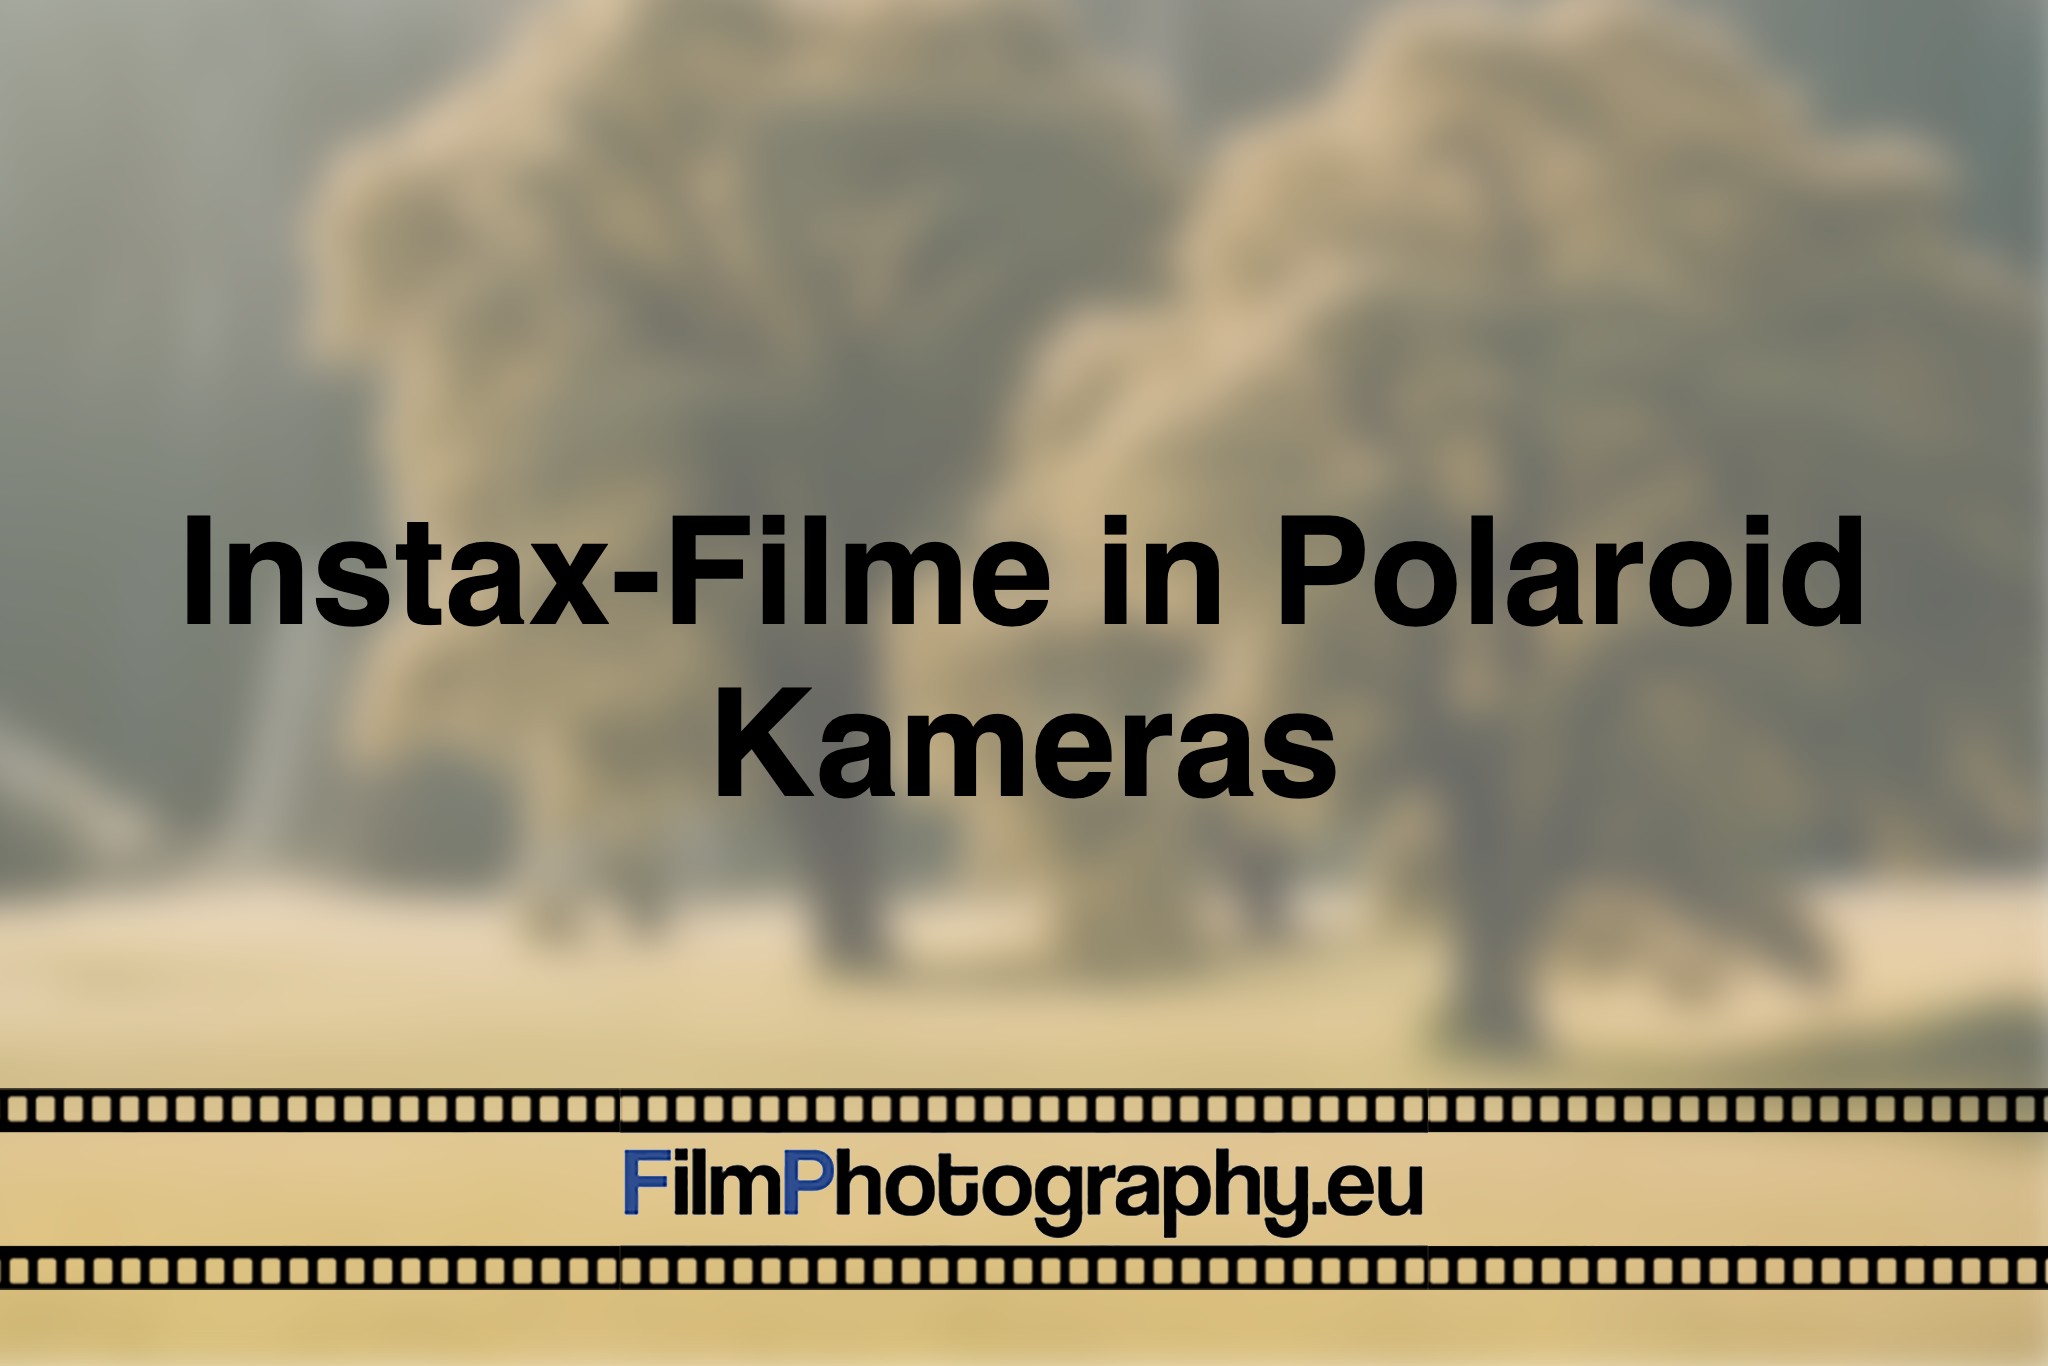 instax-filme-in-polaroid-kameras-photo-bnv